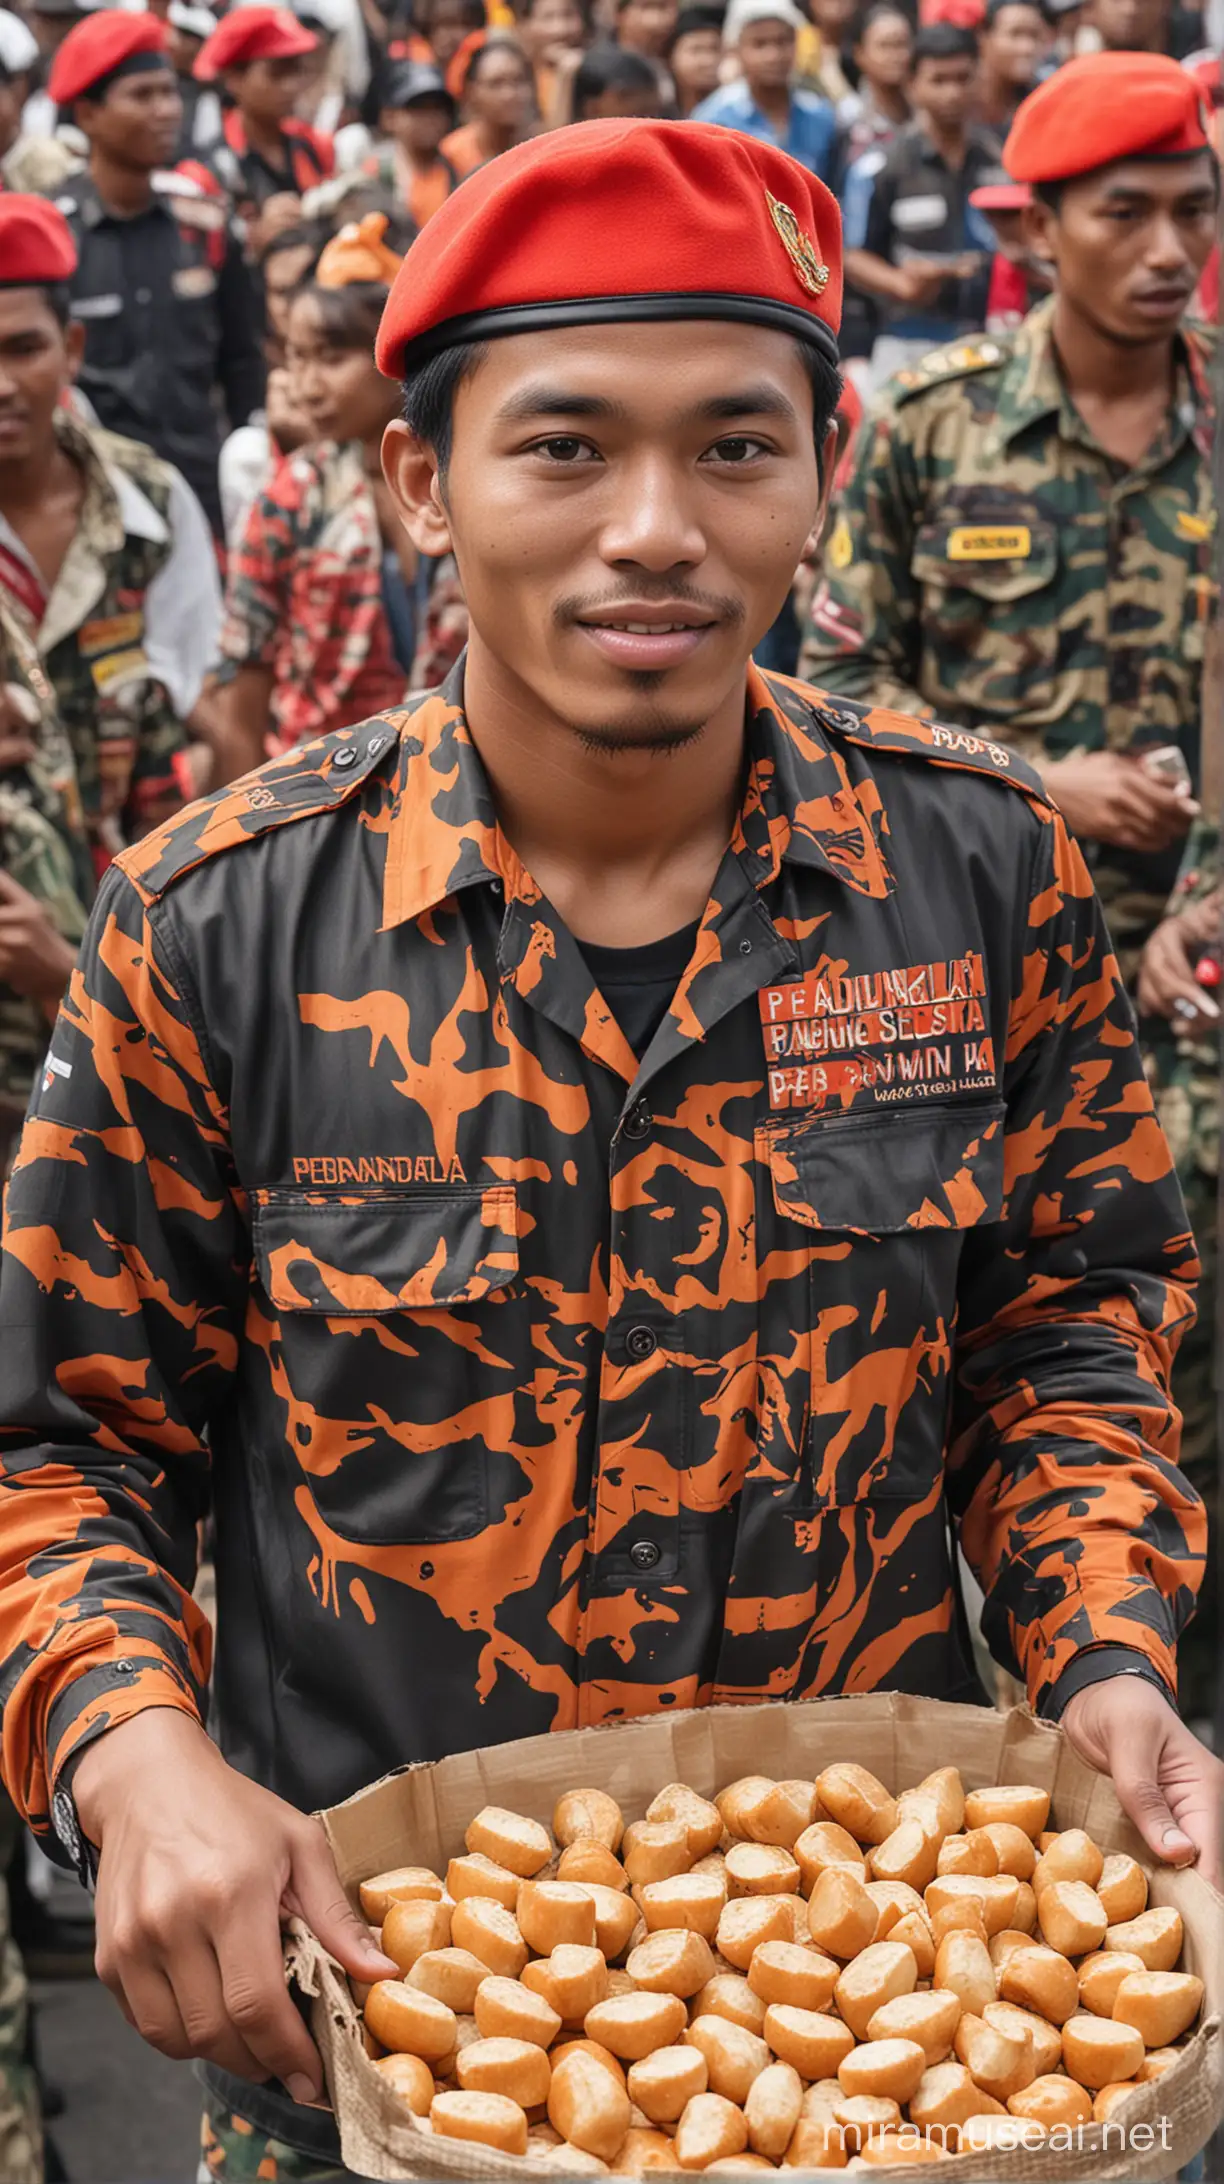 Seorang laki laki bernegara indonesia usia 25 tahun berseragam loreng berwarna orange hitam bertuliskan pemuda pancasila di dada sebelah kiri dan memakai baret merah cabe sedang di mengambil makanan di kerumunan banyak orang